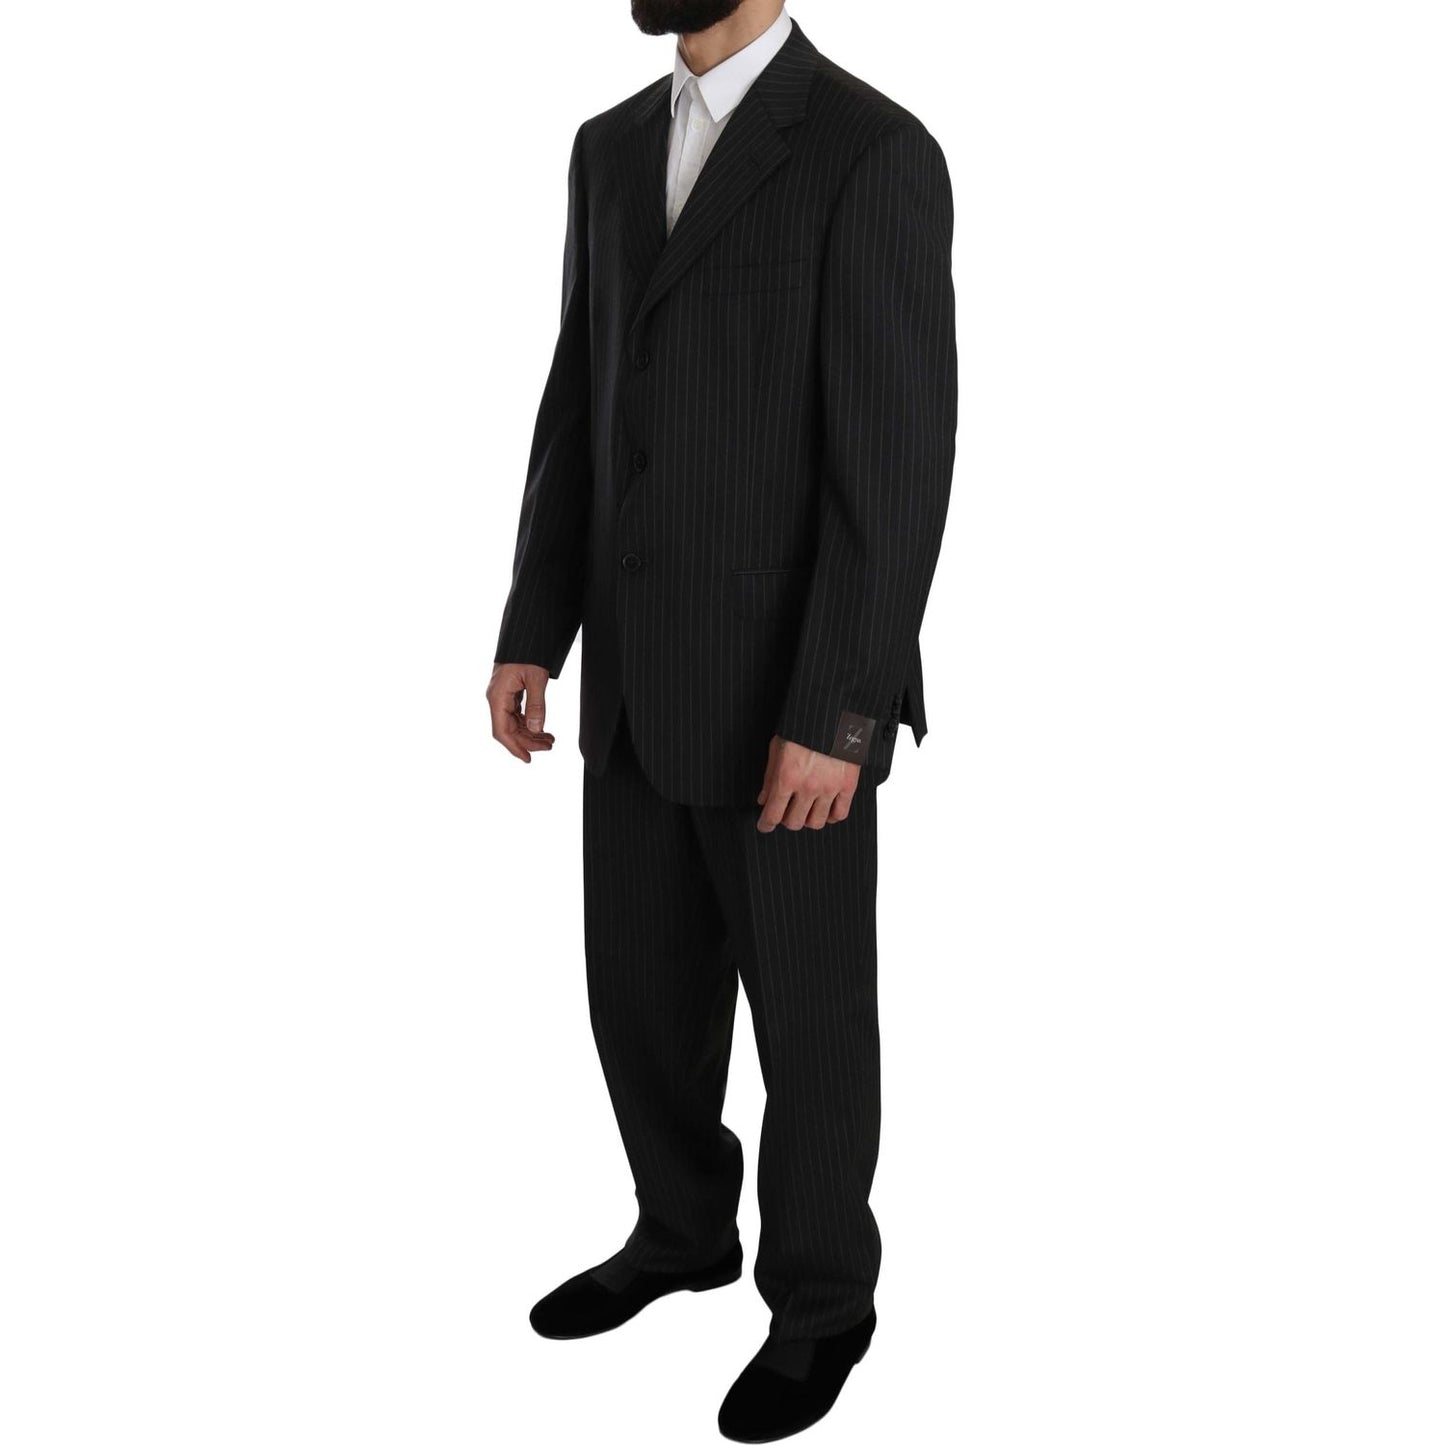 Z ZEGNA Elegant Black Striped Wool Suit Suit black-striped-two-piece-3-button-100-wool-suit IMG_7797-scaled.jpg